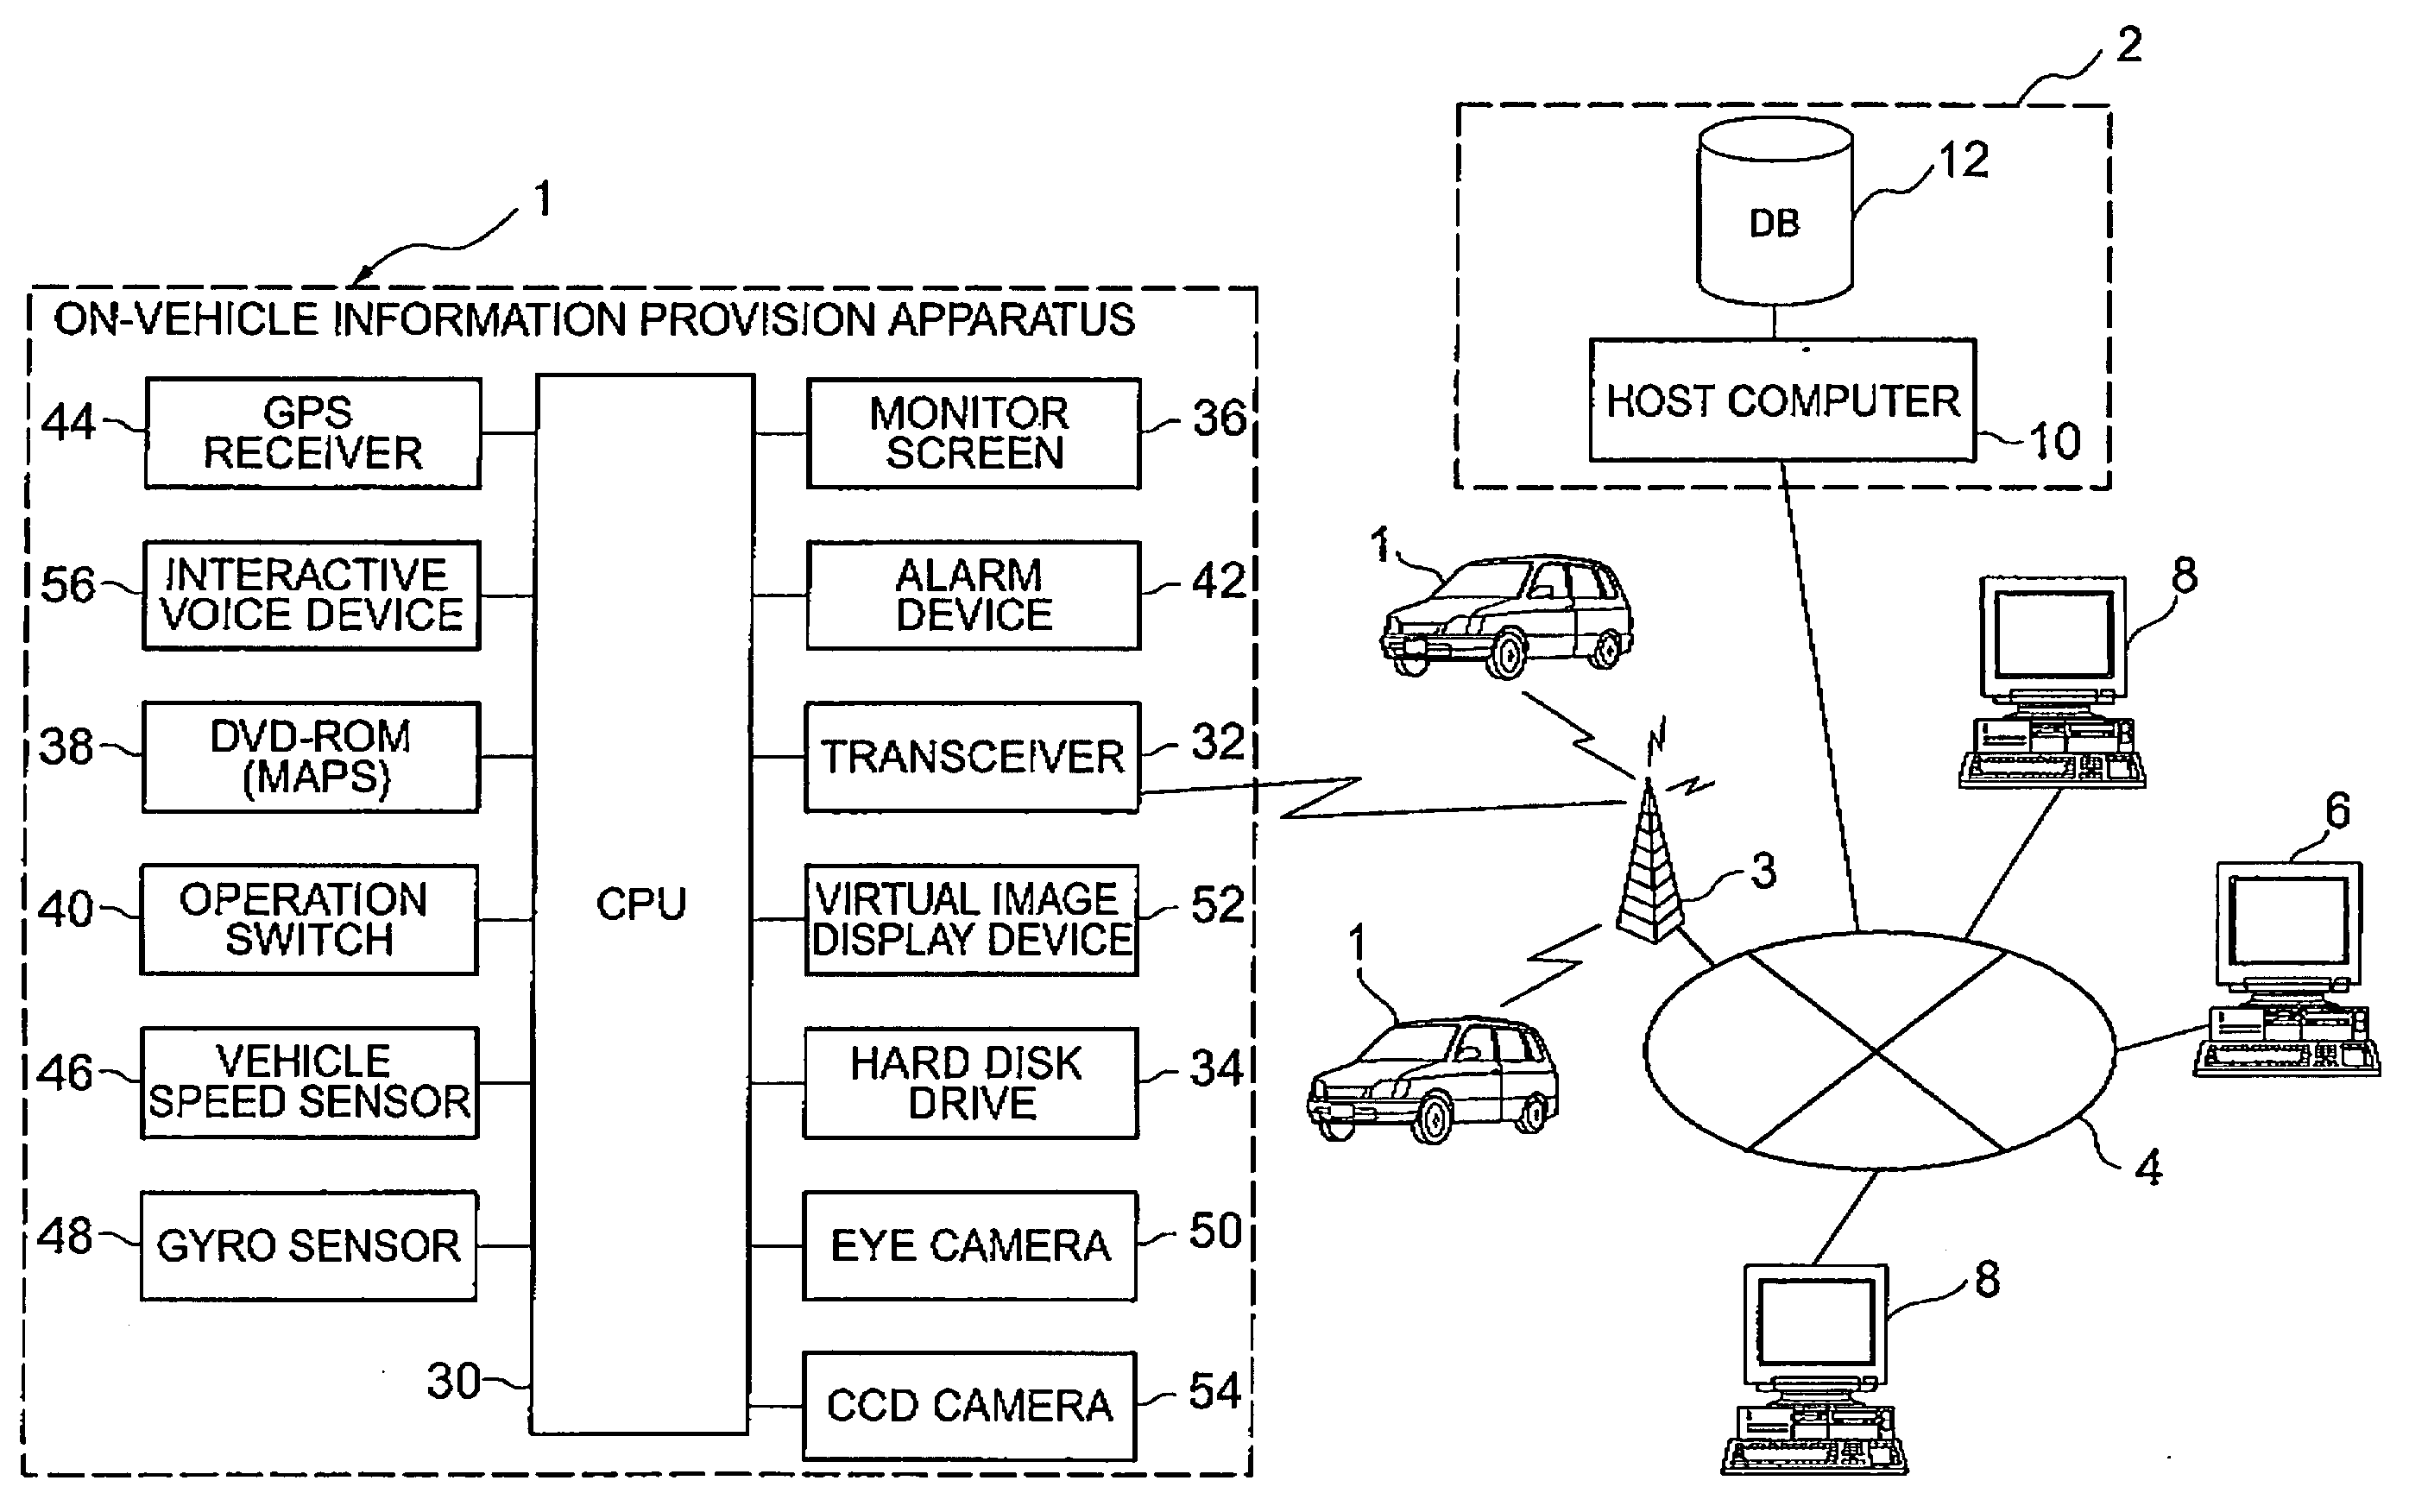 On-vehicle information provision apparatus